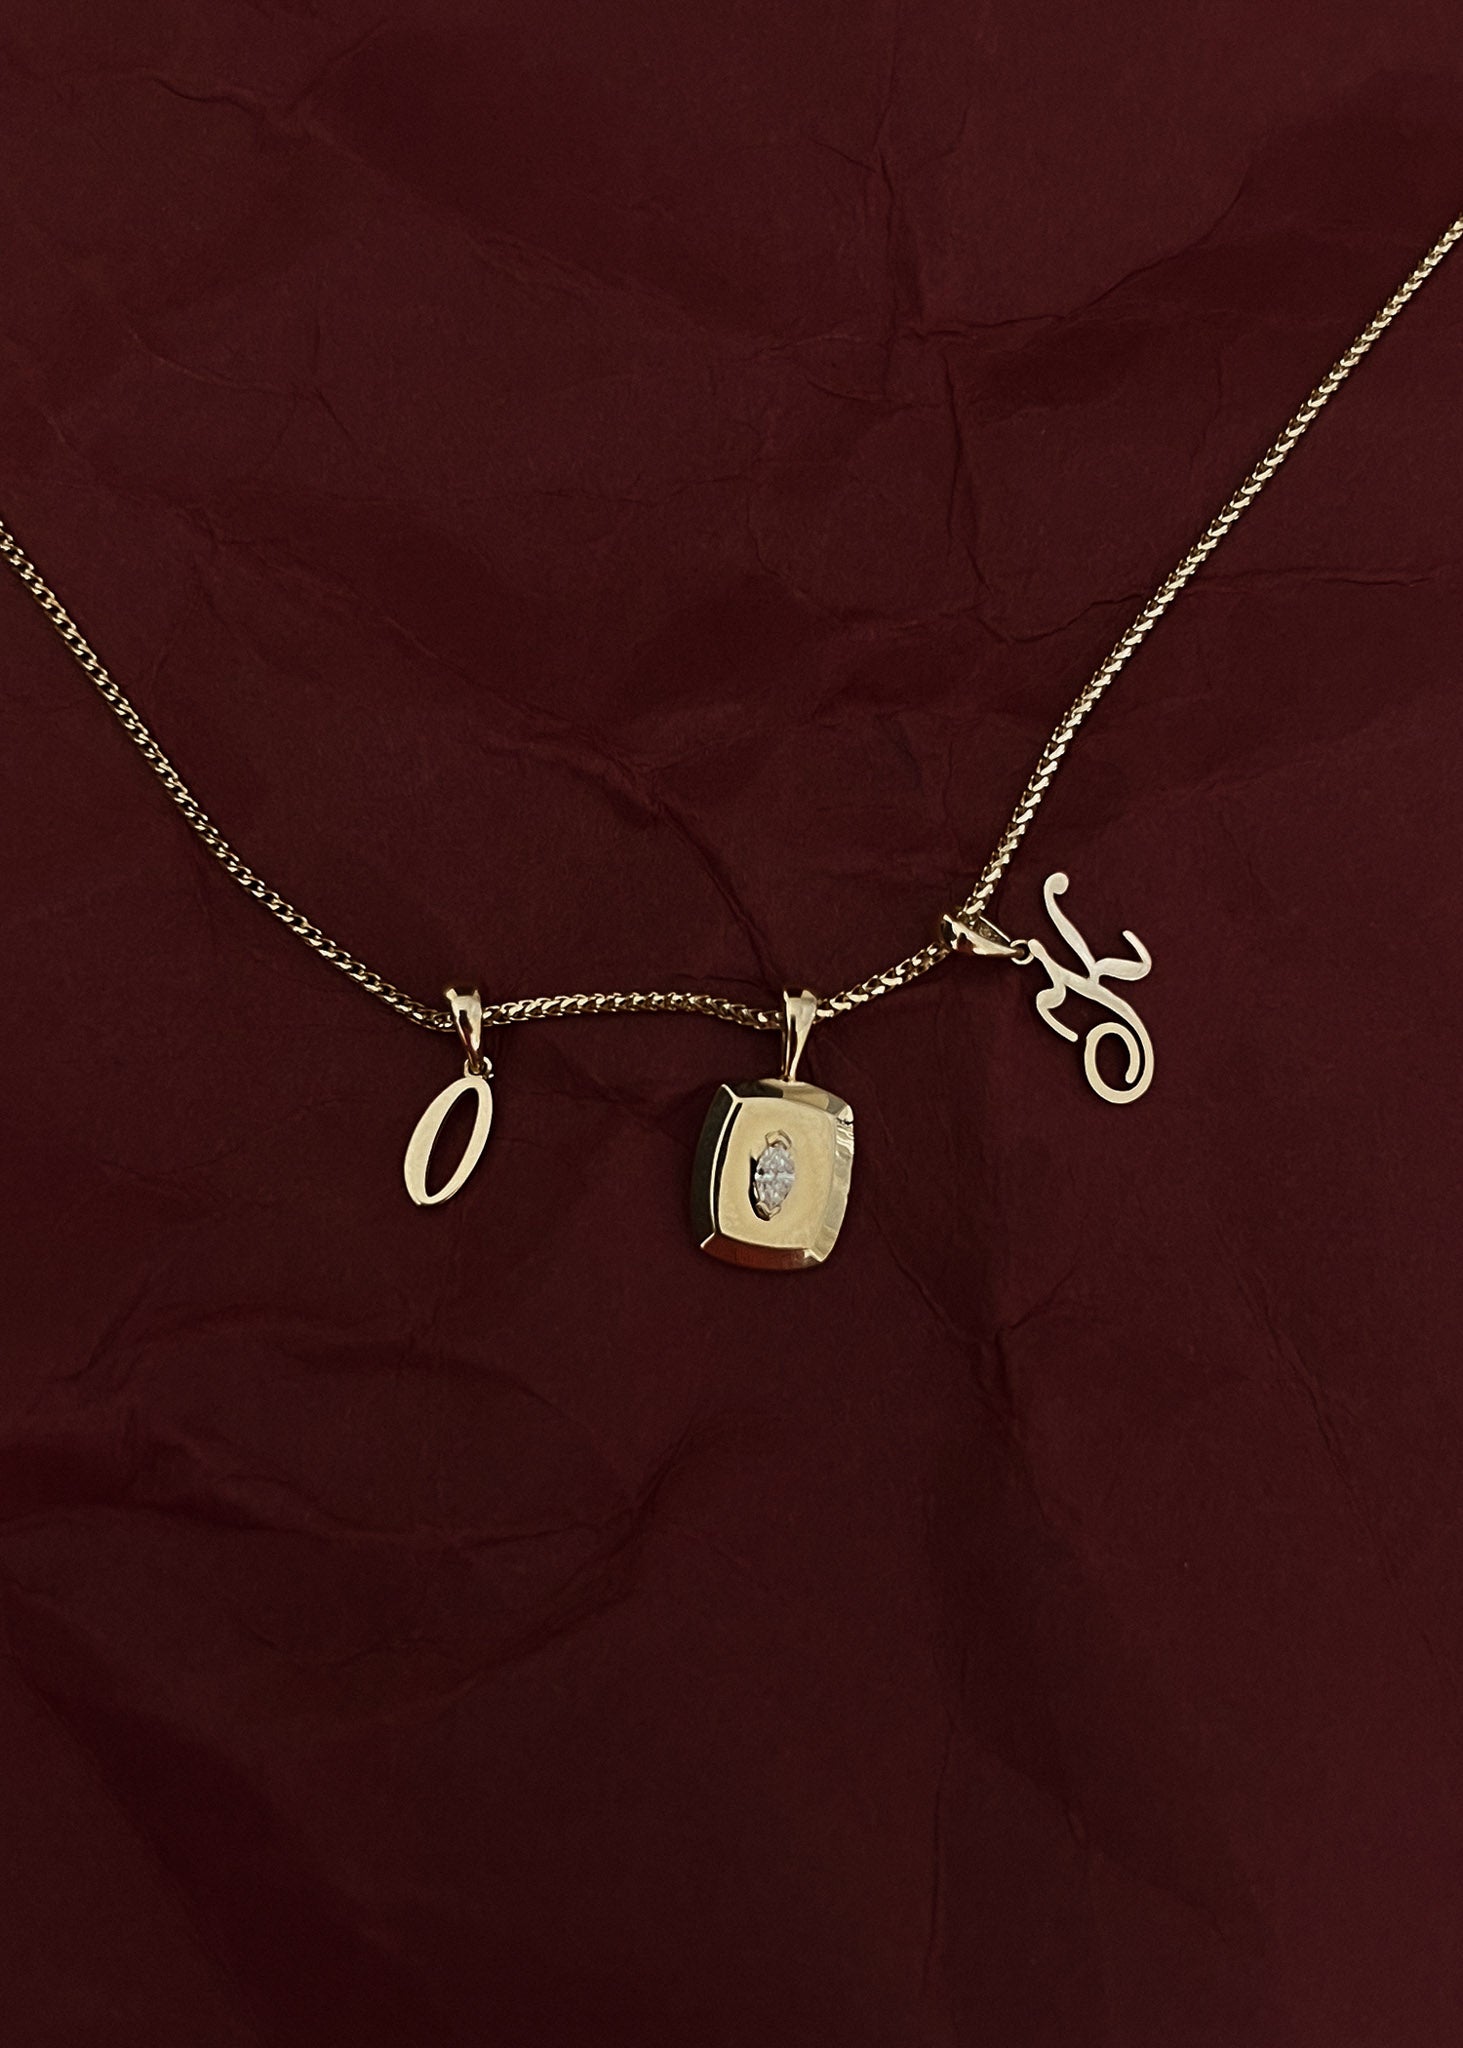 Heart Charm For Bracelets - 14K Gold Plated 26 Alphabet AZ Letter Initial  Charms, Dangle Heart-Shaped Sweet Love Pendant DIY Necklace Bracelet  Making